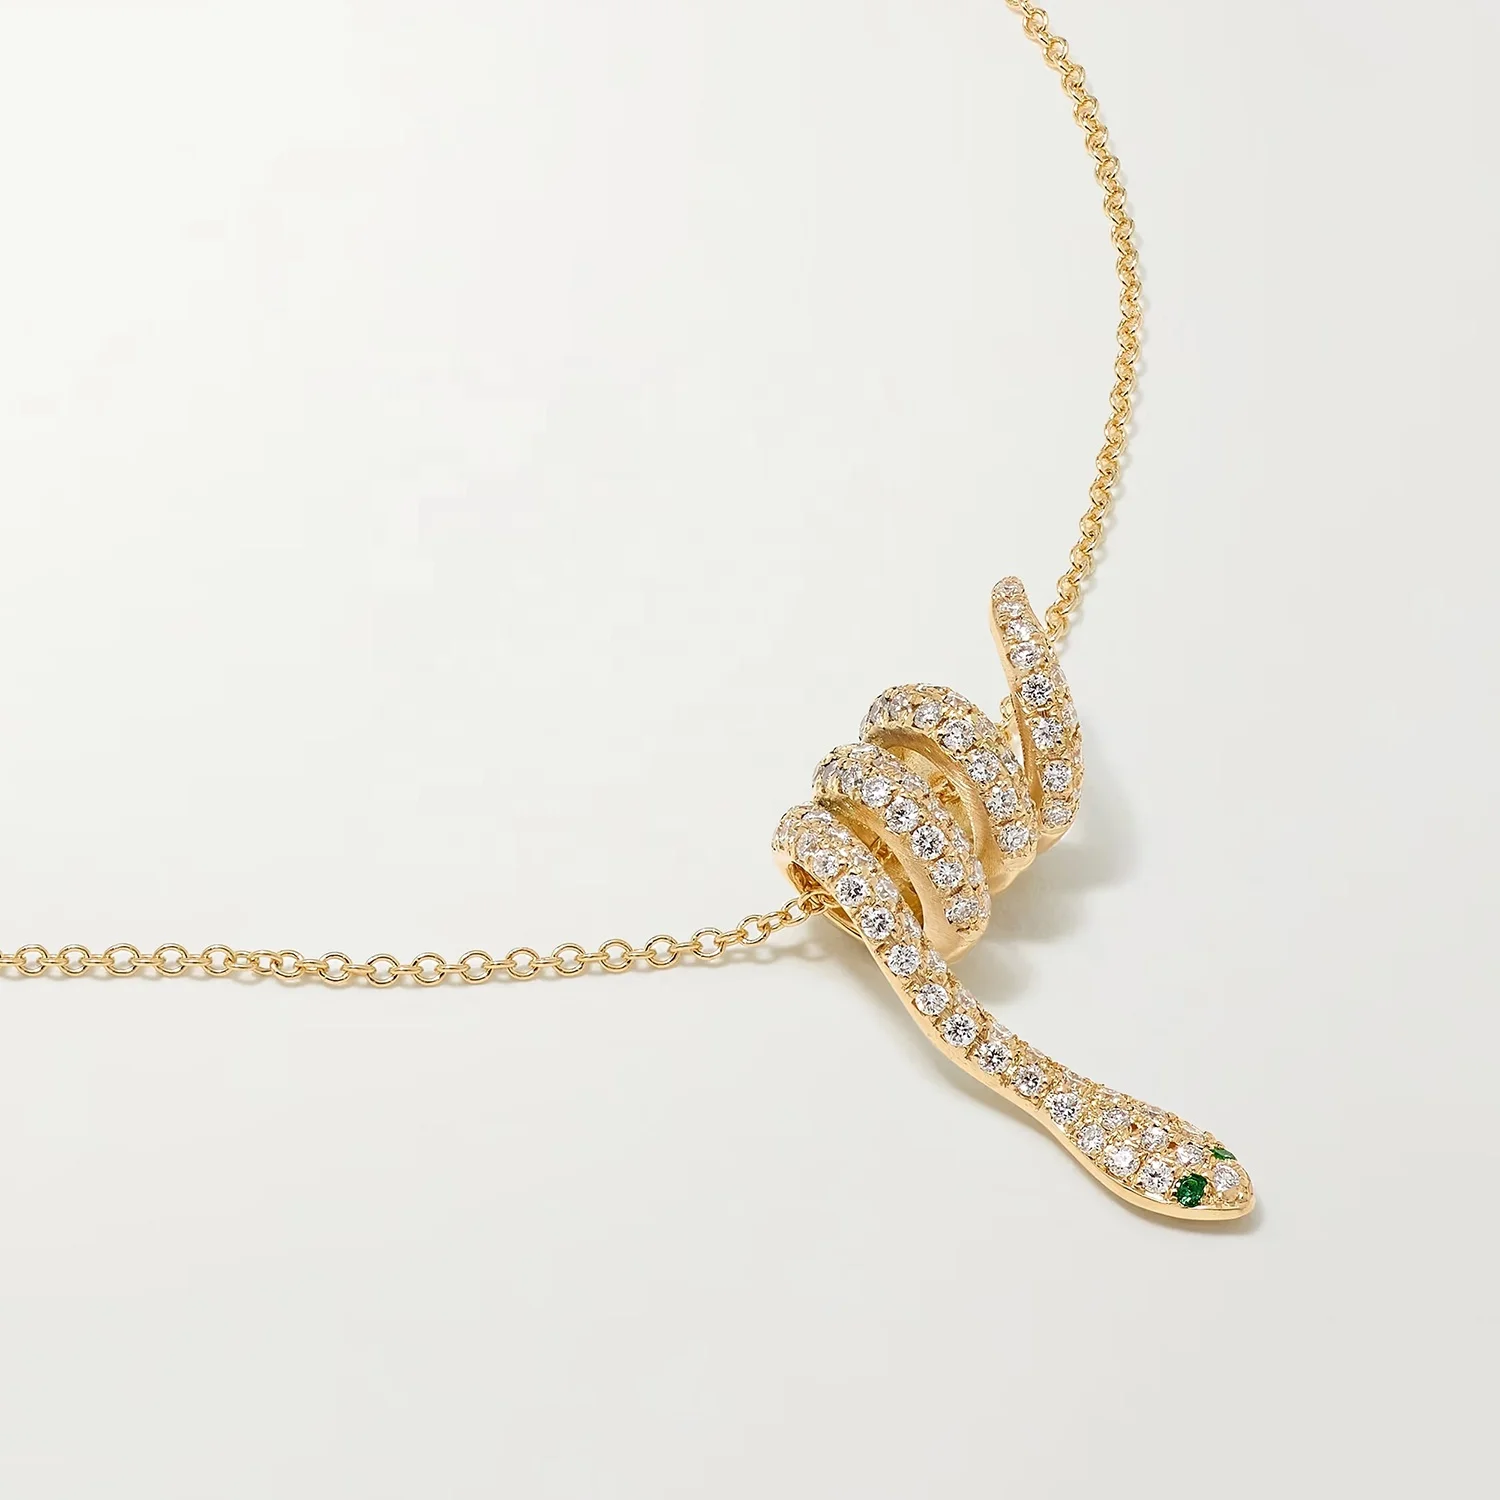 

LOZRUNVE Trendy Fashion Jewelry 18k Gold Plated Pave Snake Animal Pendant Necklace Silver 925